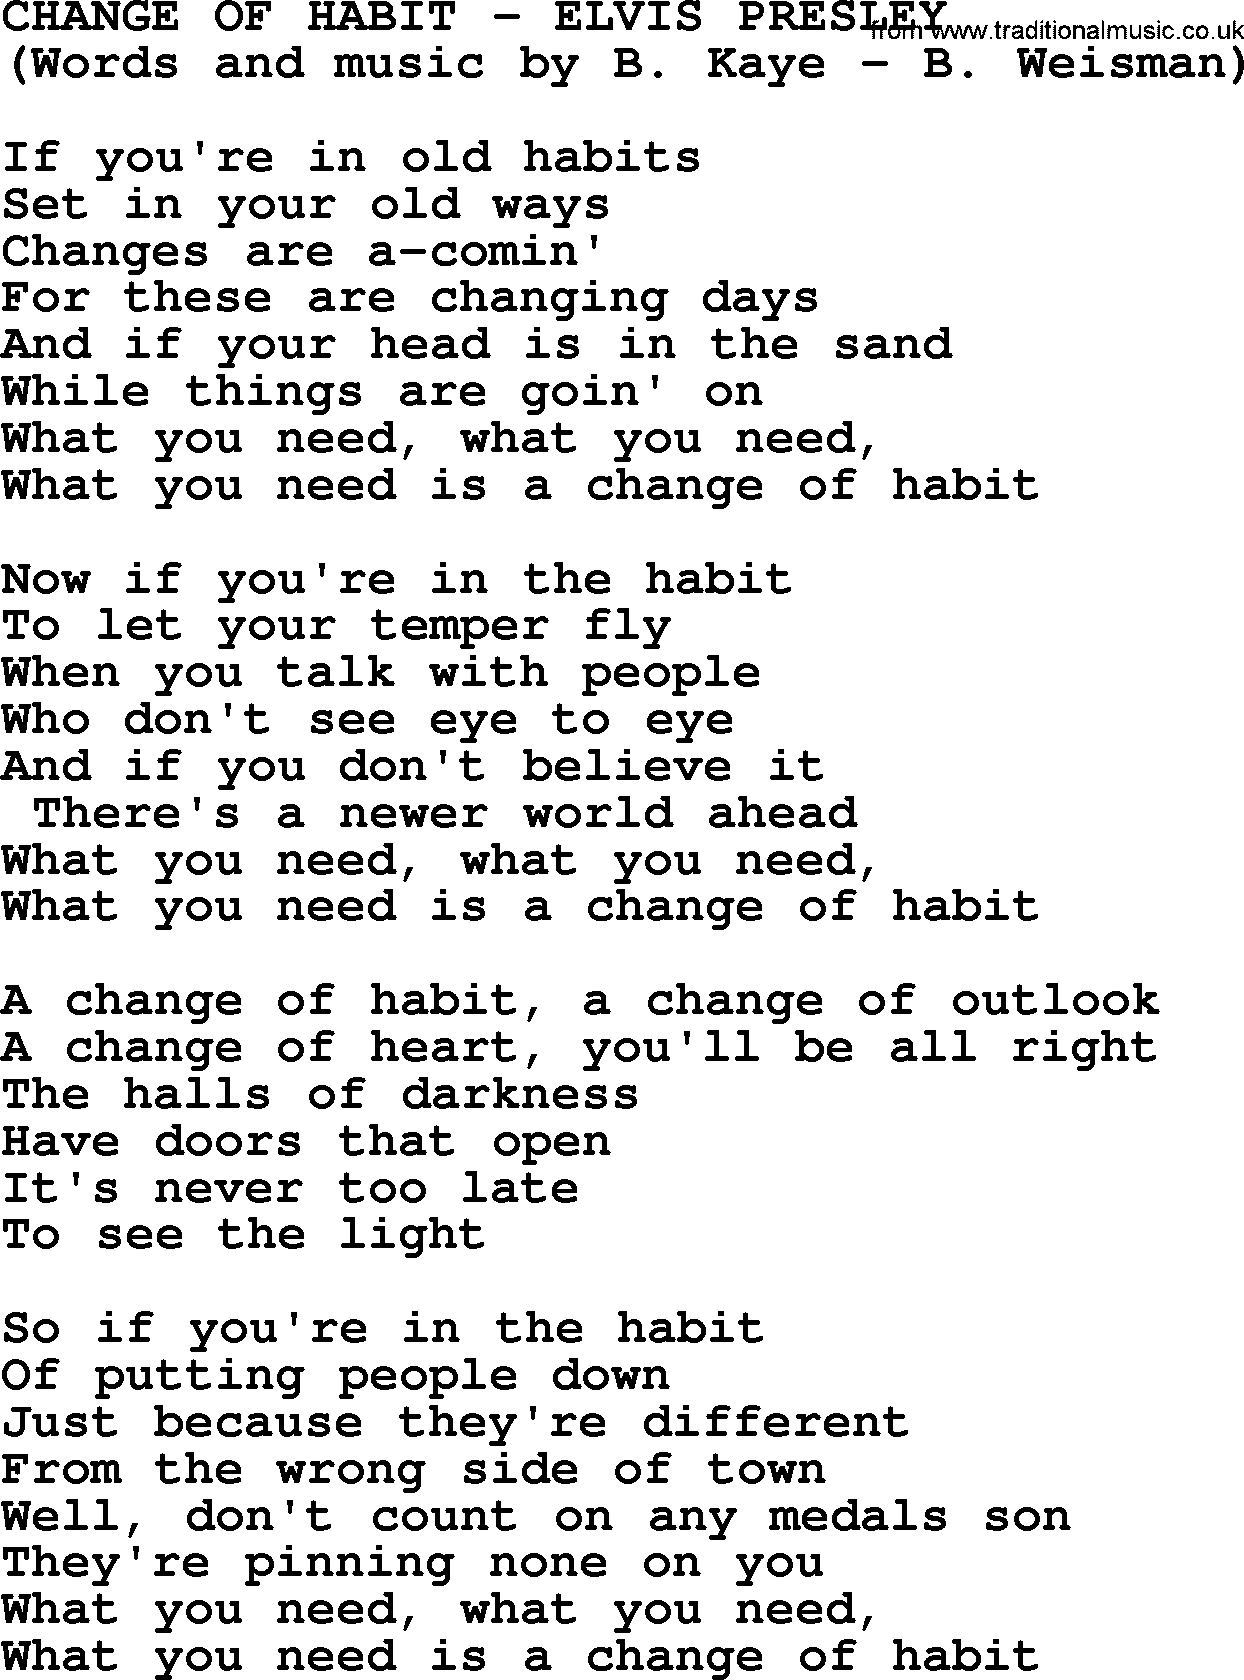 Elvis Presley song: Change Of Habit lyrics